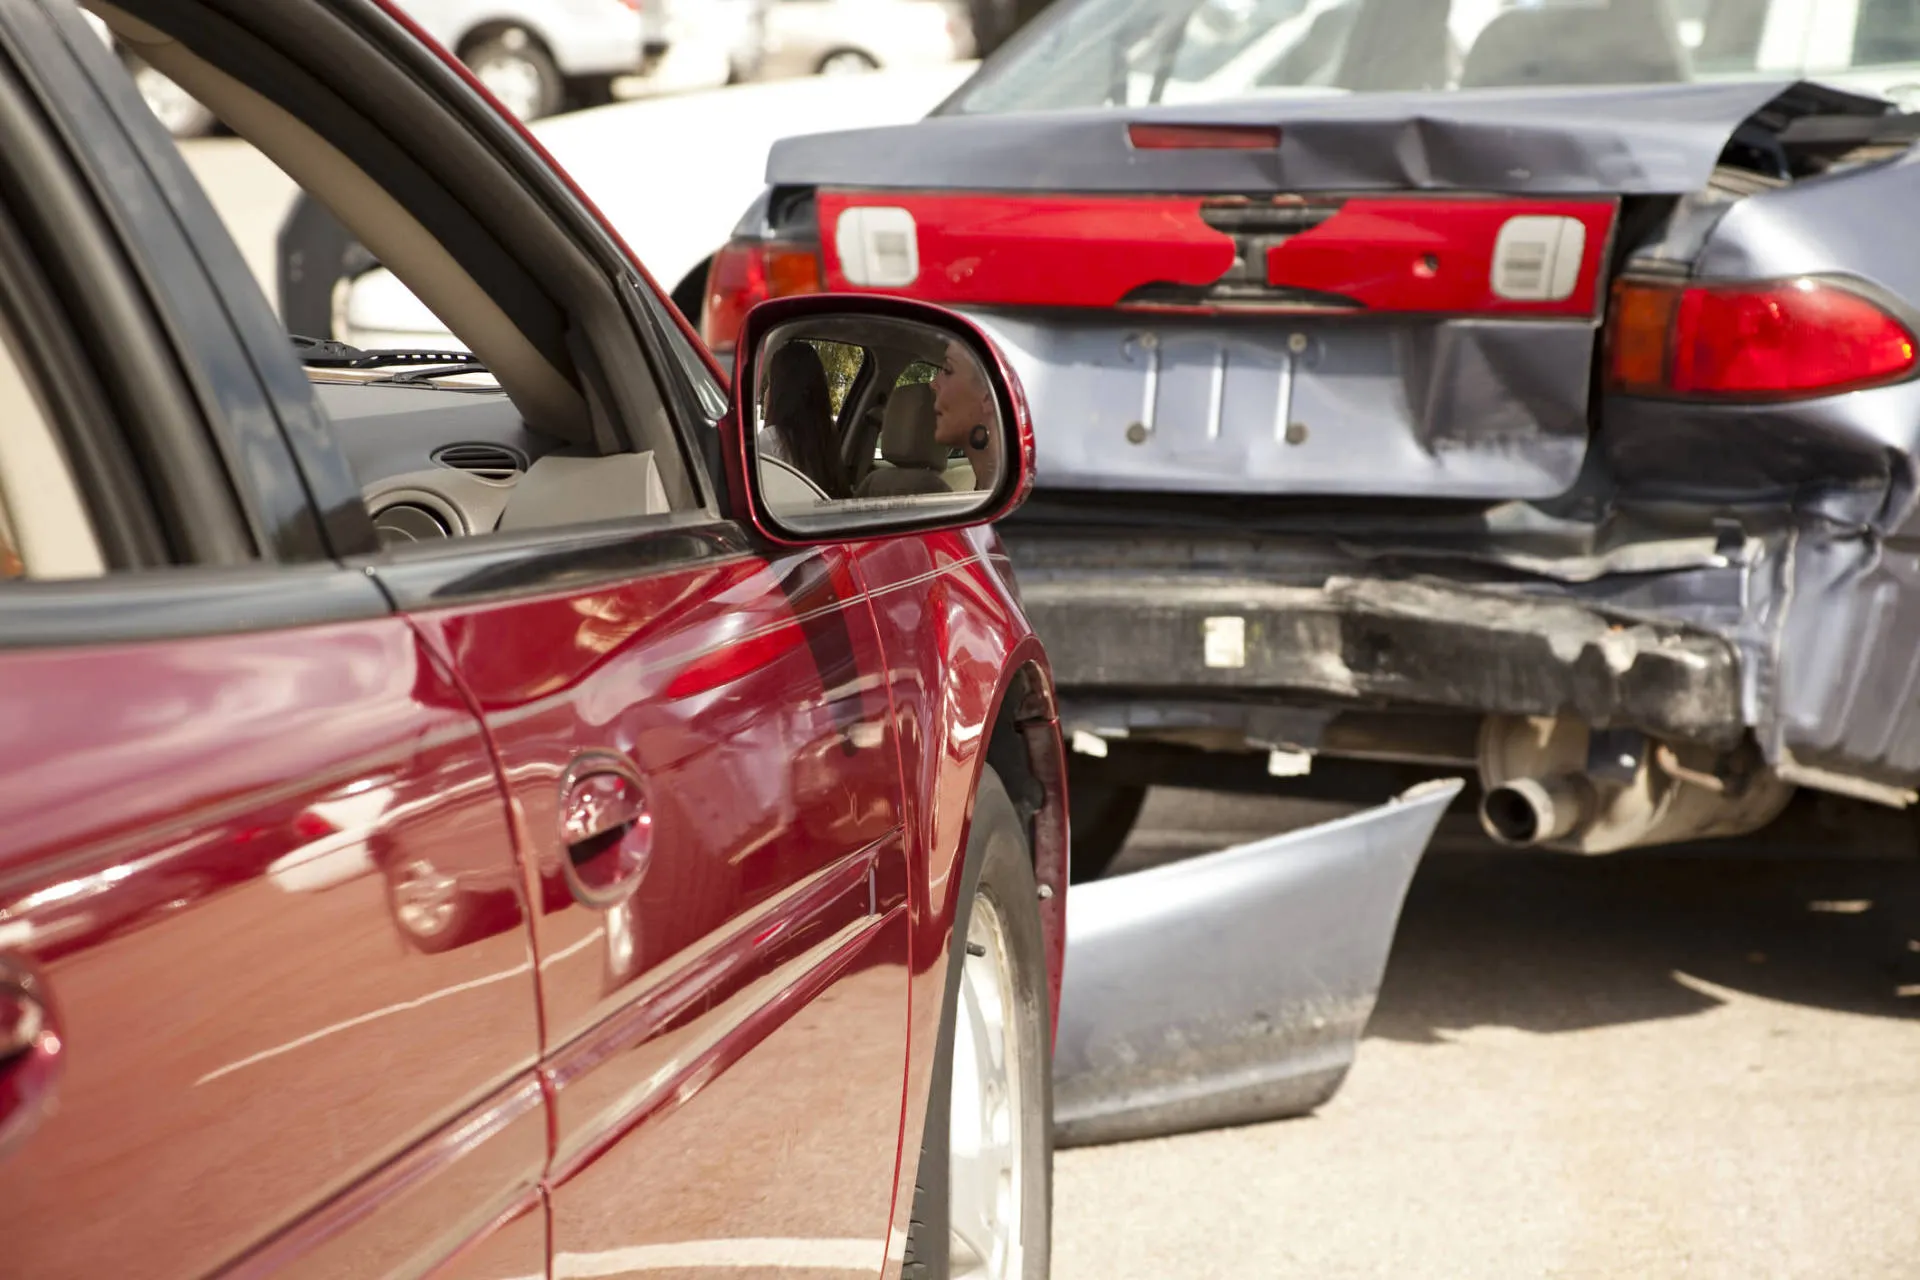 Is a Parking Garage Responsible for Damaged or Stolen Cars? - FindLaw